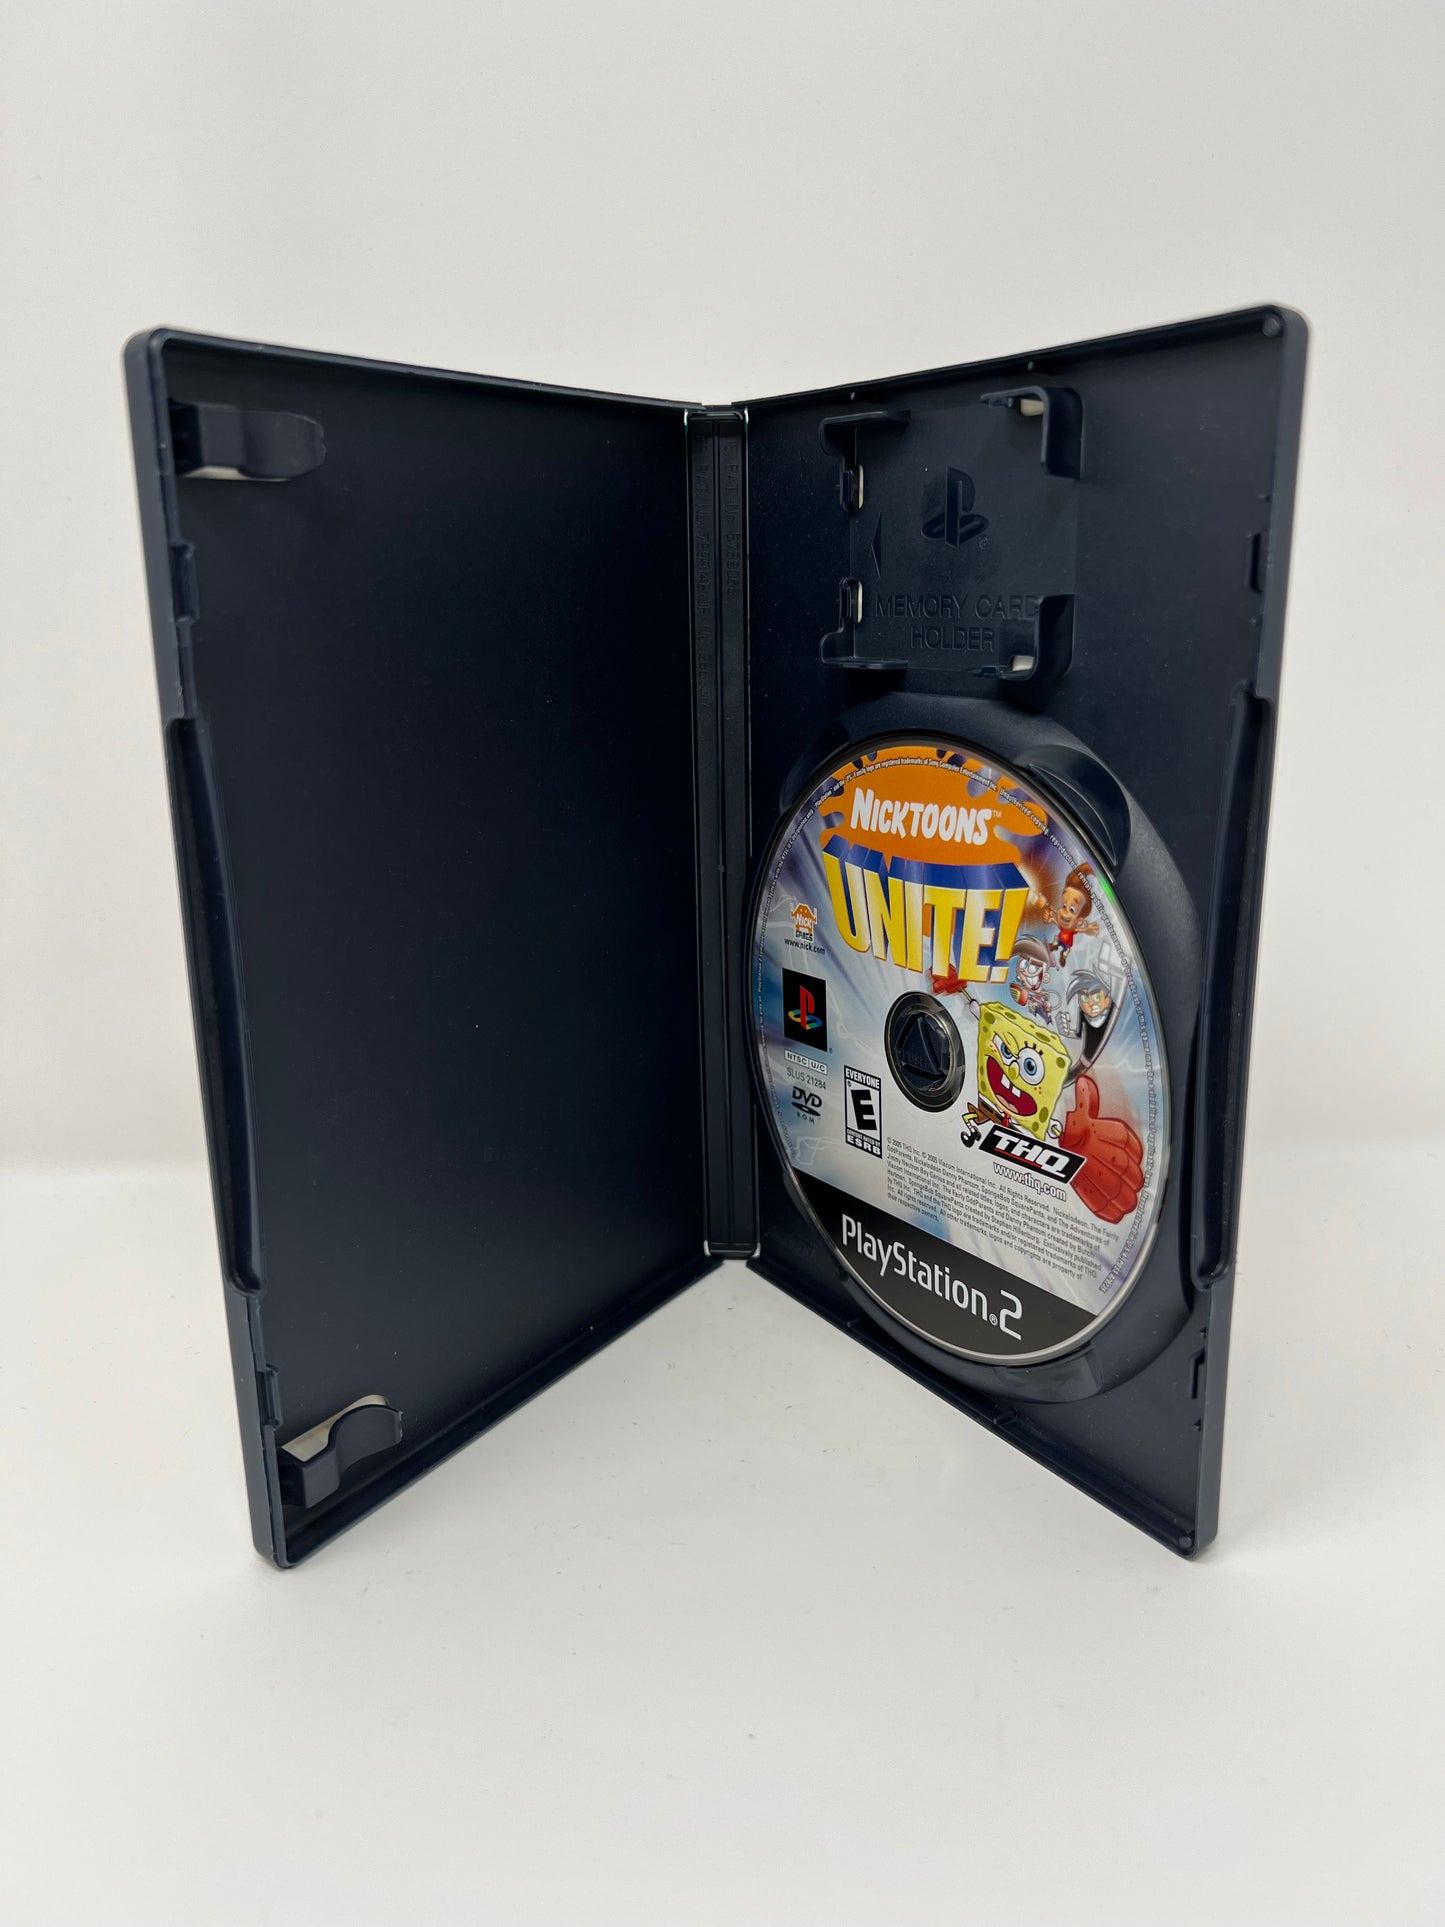 Nicktoons Unite! - PS2 Game - Used